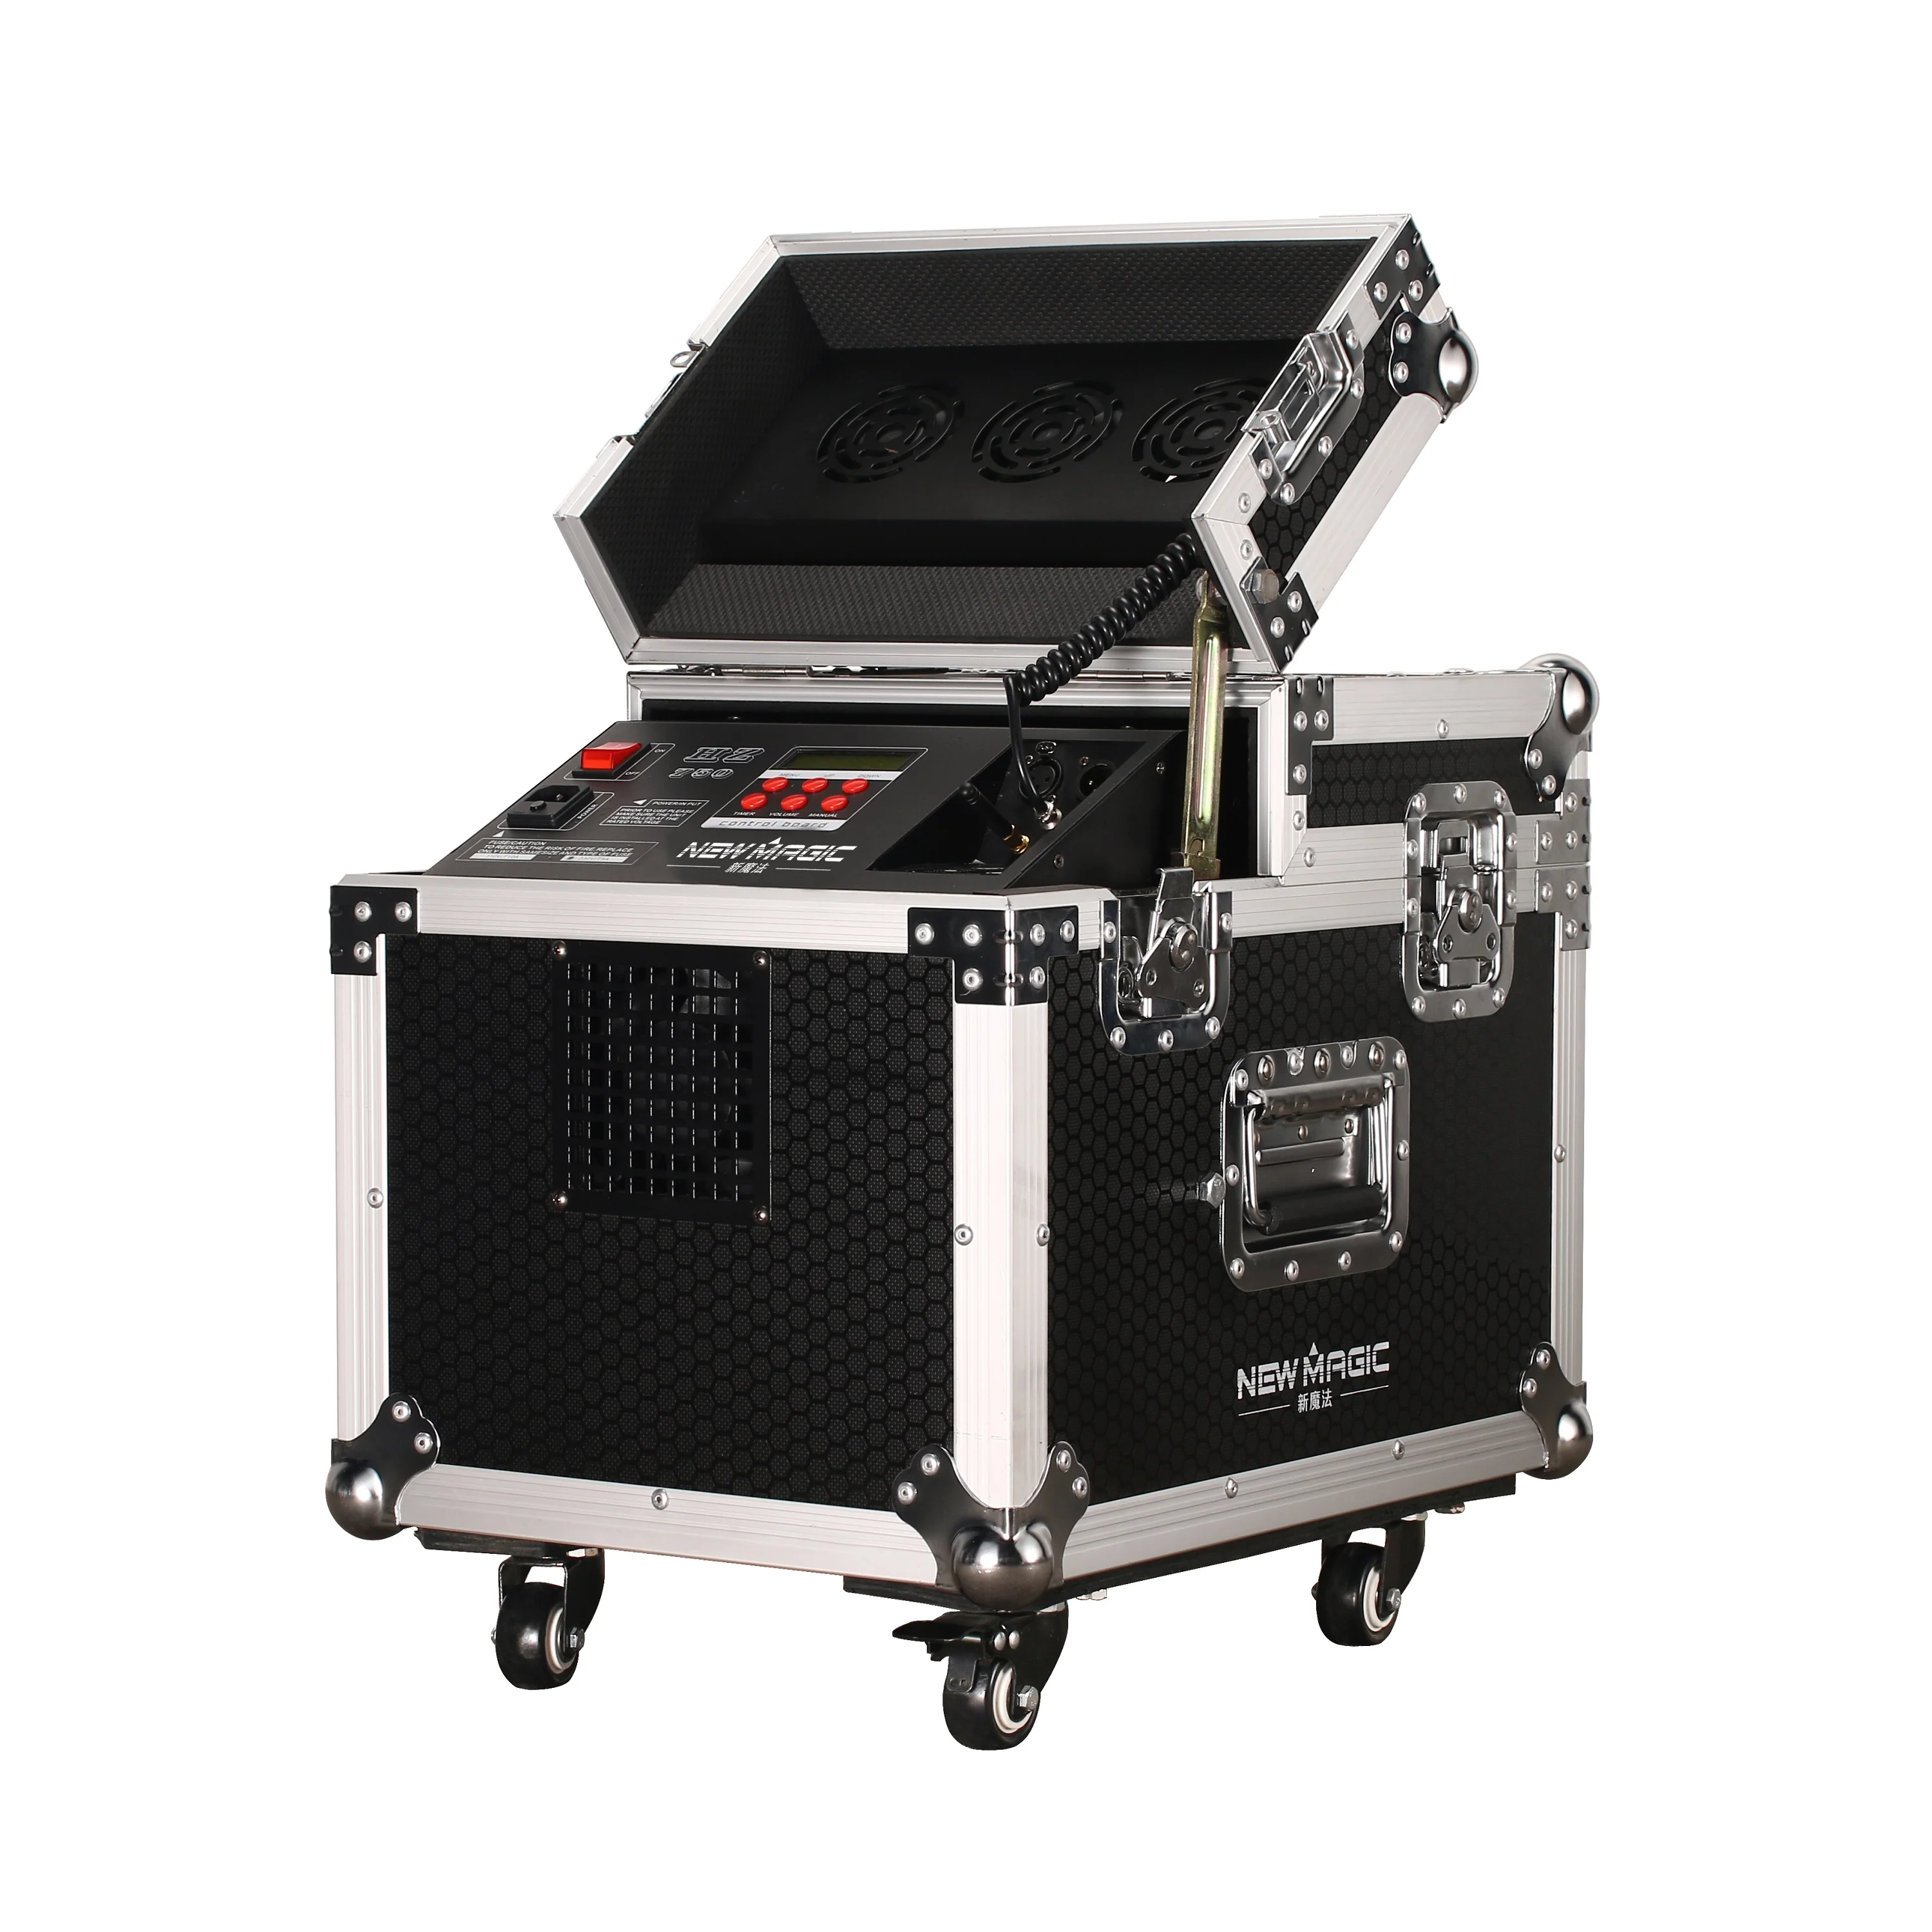 EWTX Reputation And Development Fan Speed Adjustable Hazer Machine Fog Smoke Machine For Stage Shows/ Performances/ Disco (1600365243641)